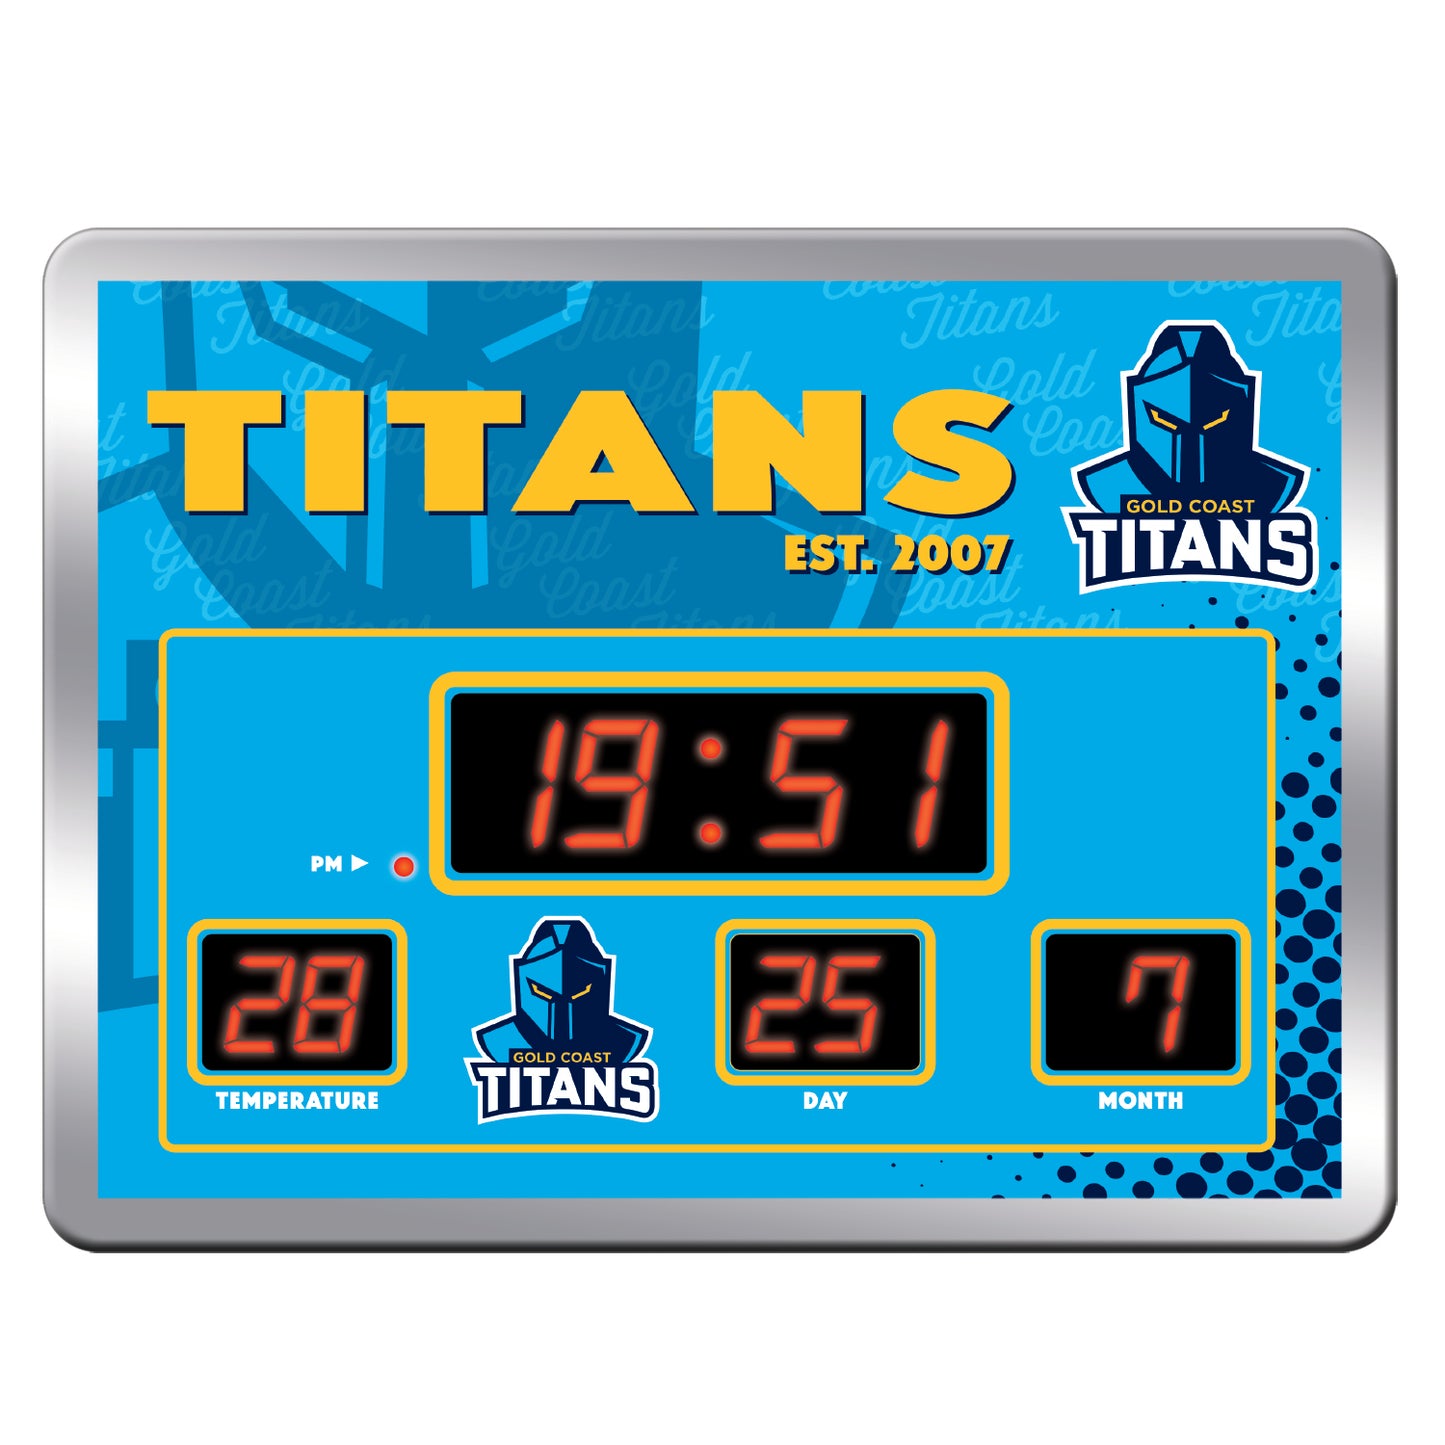 Gold Coast Titans LED Scoreboard Clock